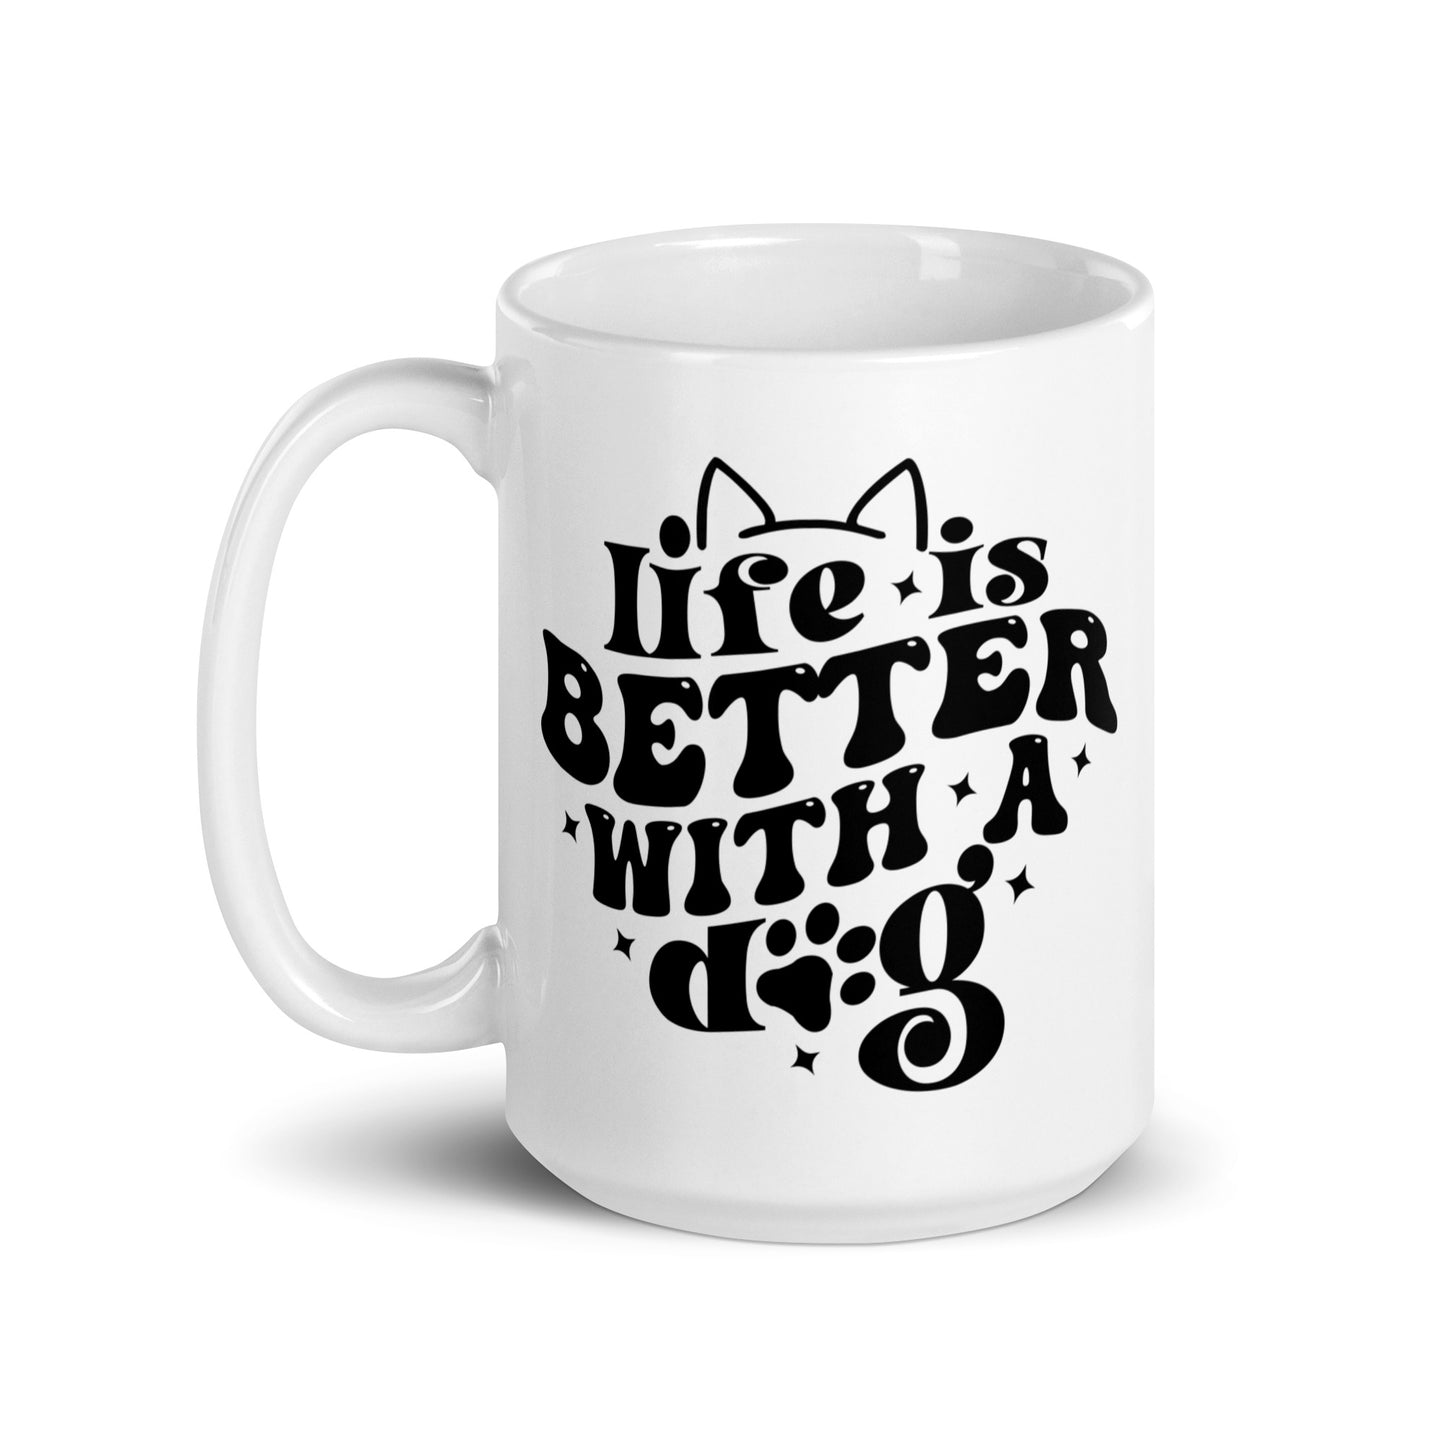 Life is Better with a Dog Coffee Mug